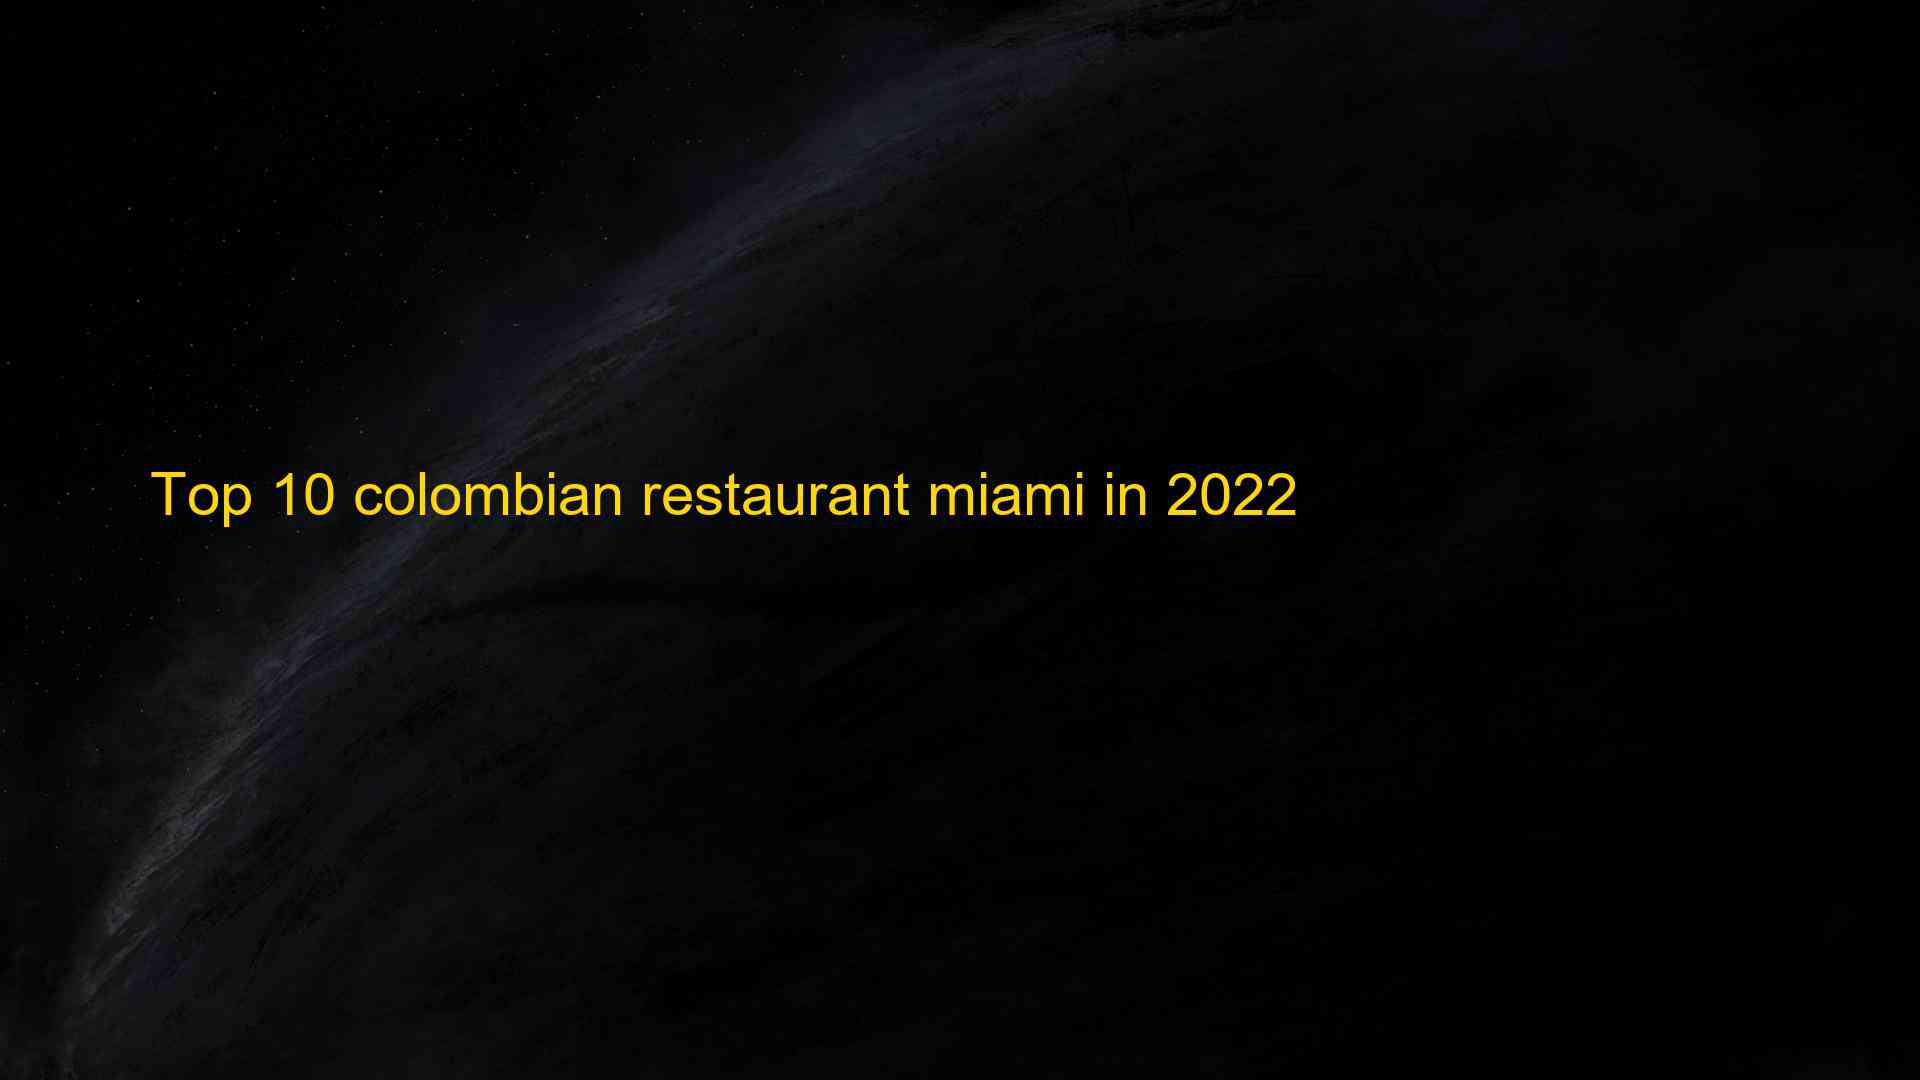 Top 10 colombian restaurant miami in 2022 1662822847